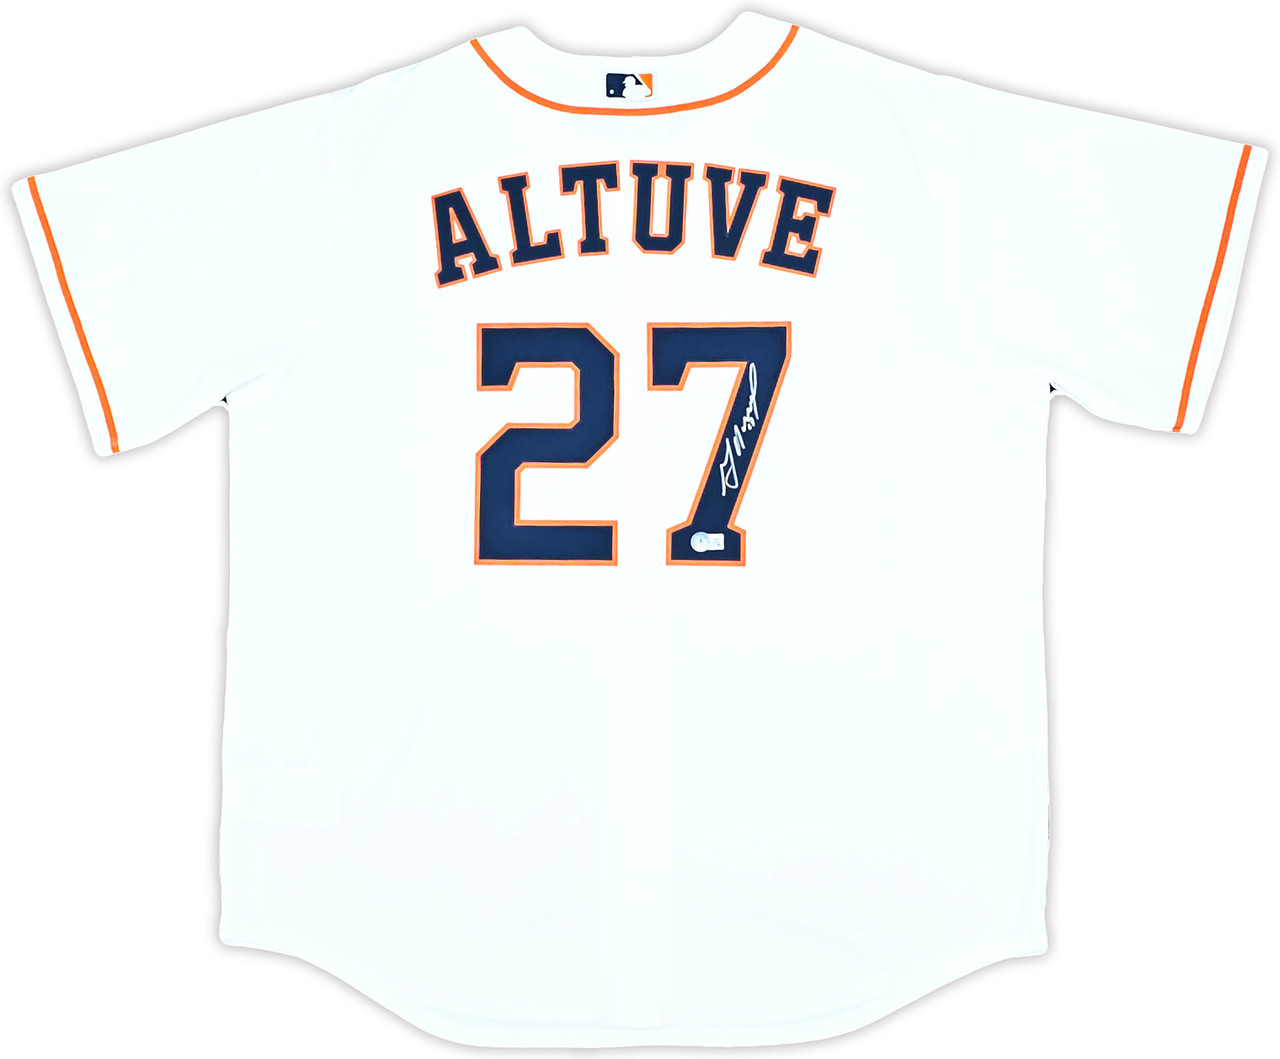 Jose Altuve Houston Astros Autographed White Nike Jersey Size XL